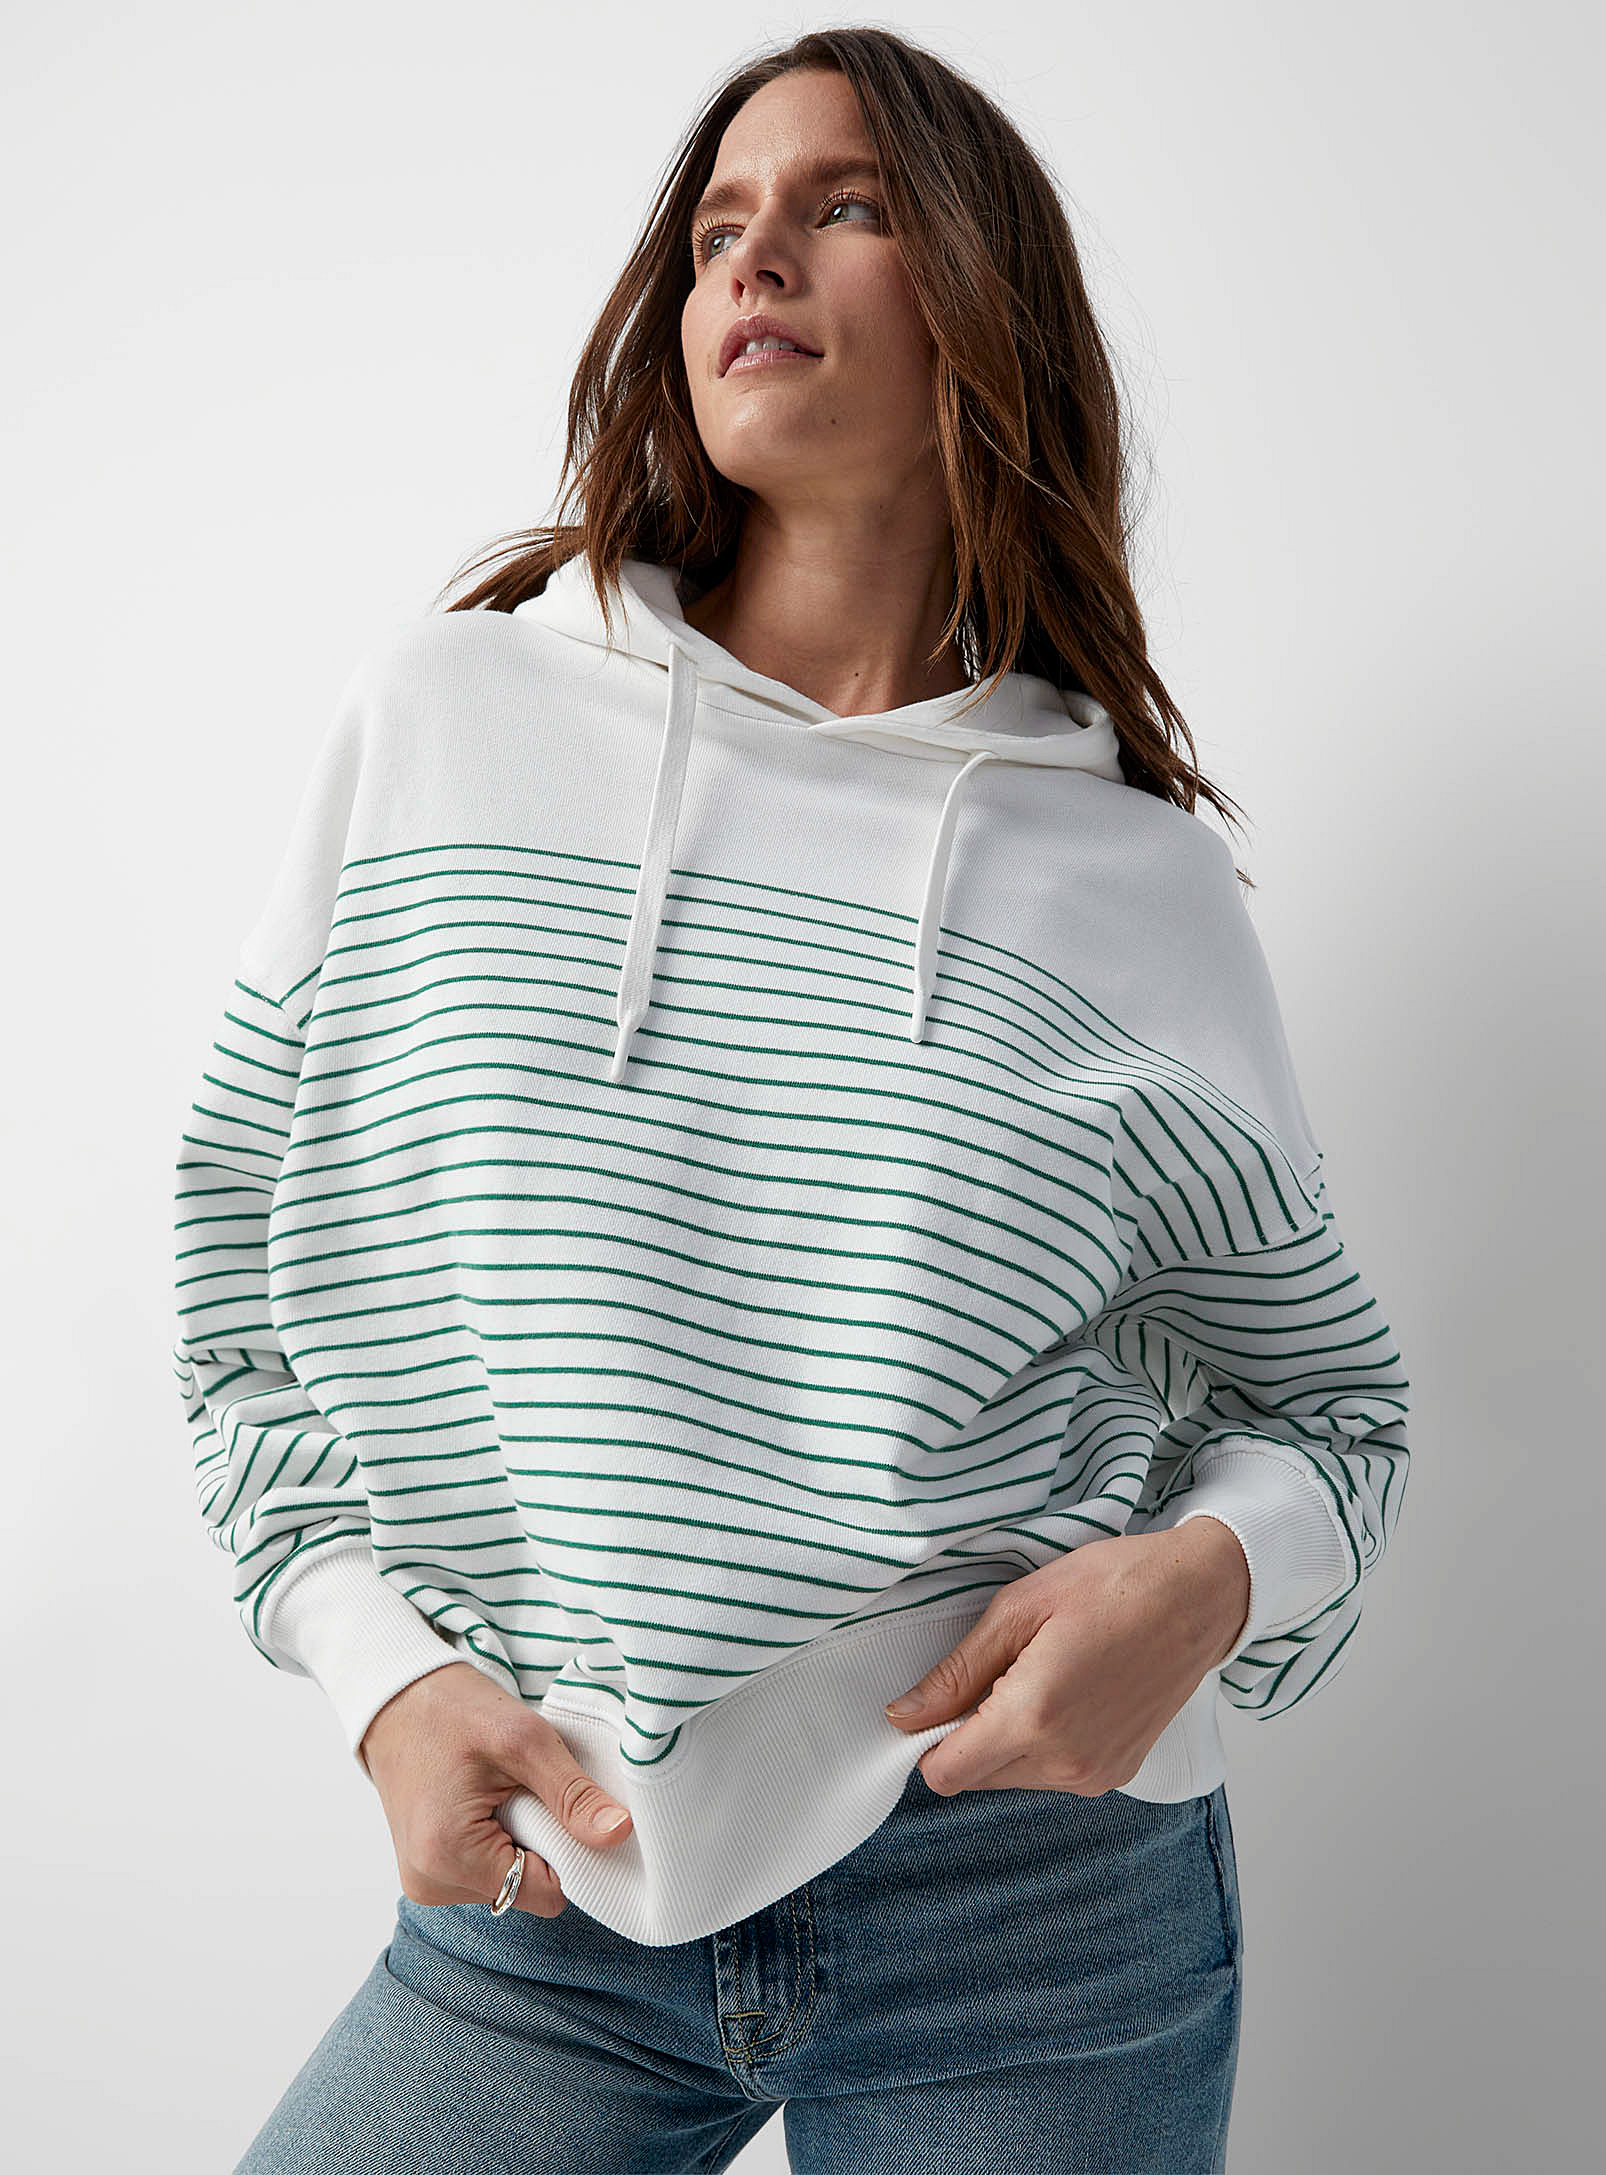 Contemporaine - Women's Horizontal stripes hooded sweatshirt